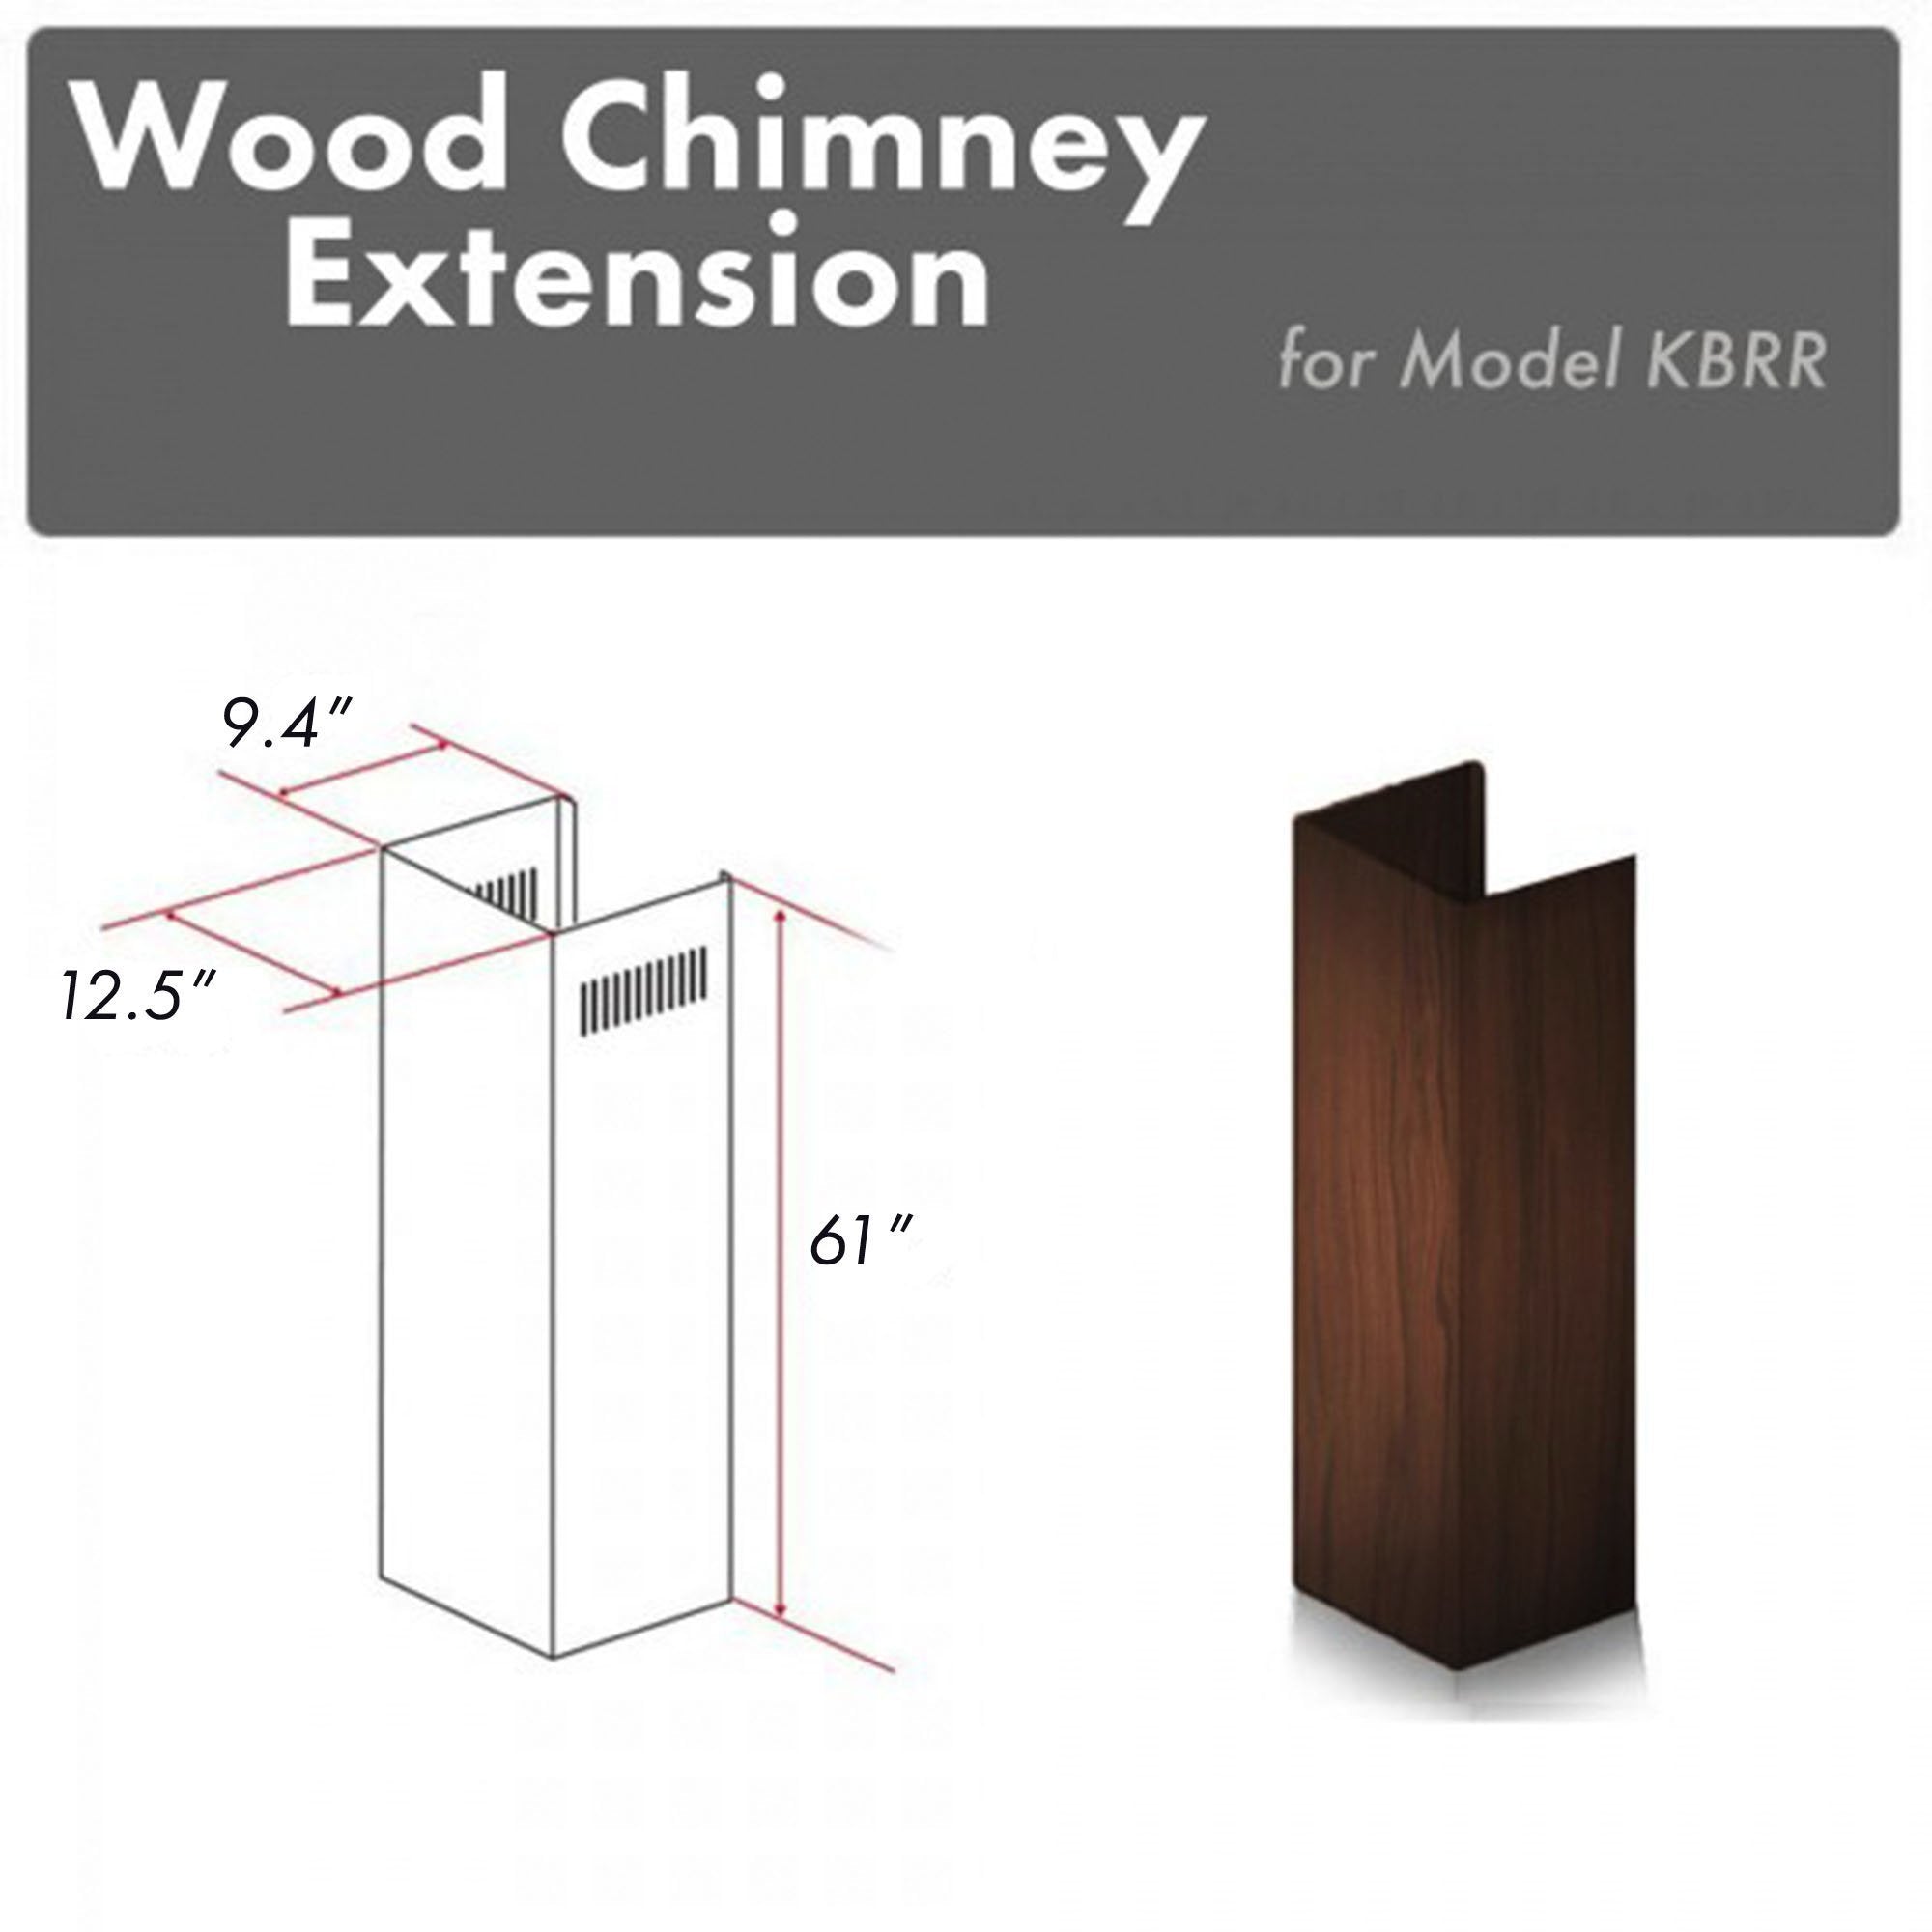 ZLINE 61" Wooden Chimney Extension for Ceilings up to 12.5 ft. (KBRR-E) - Rustic Kitchen & Bath - Range Hood Accessories - ZLINE Kitchen and Bath